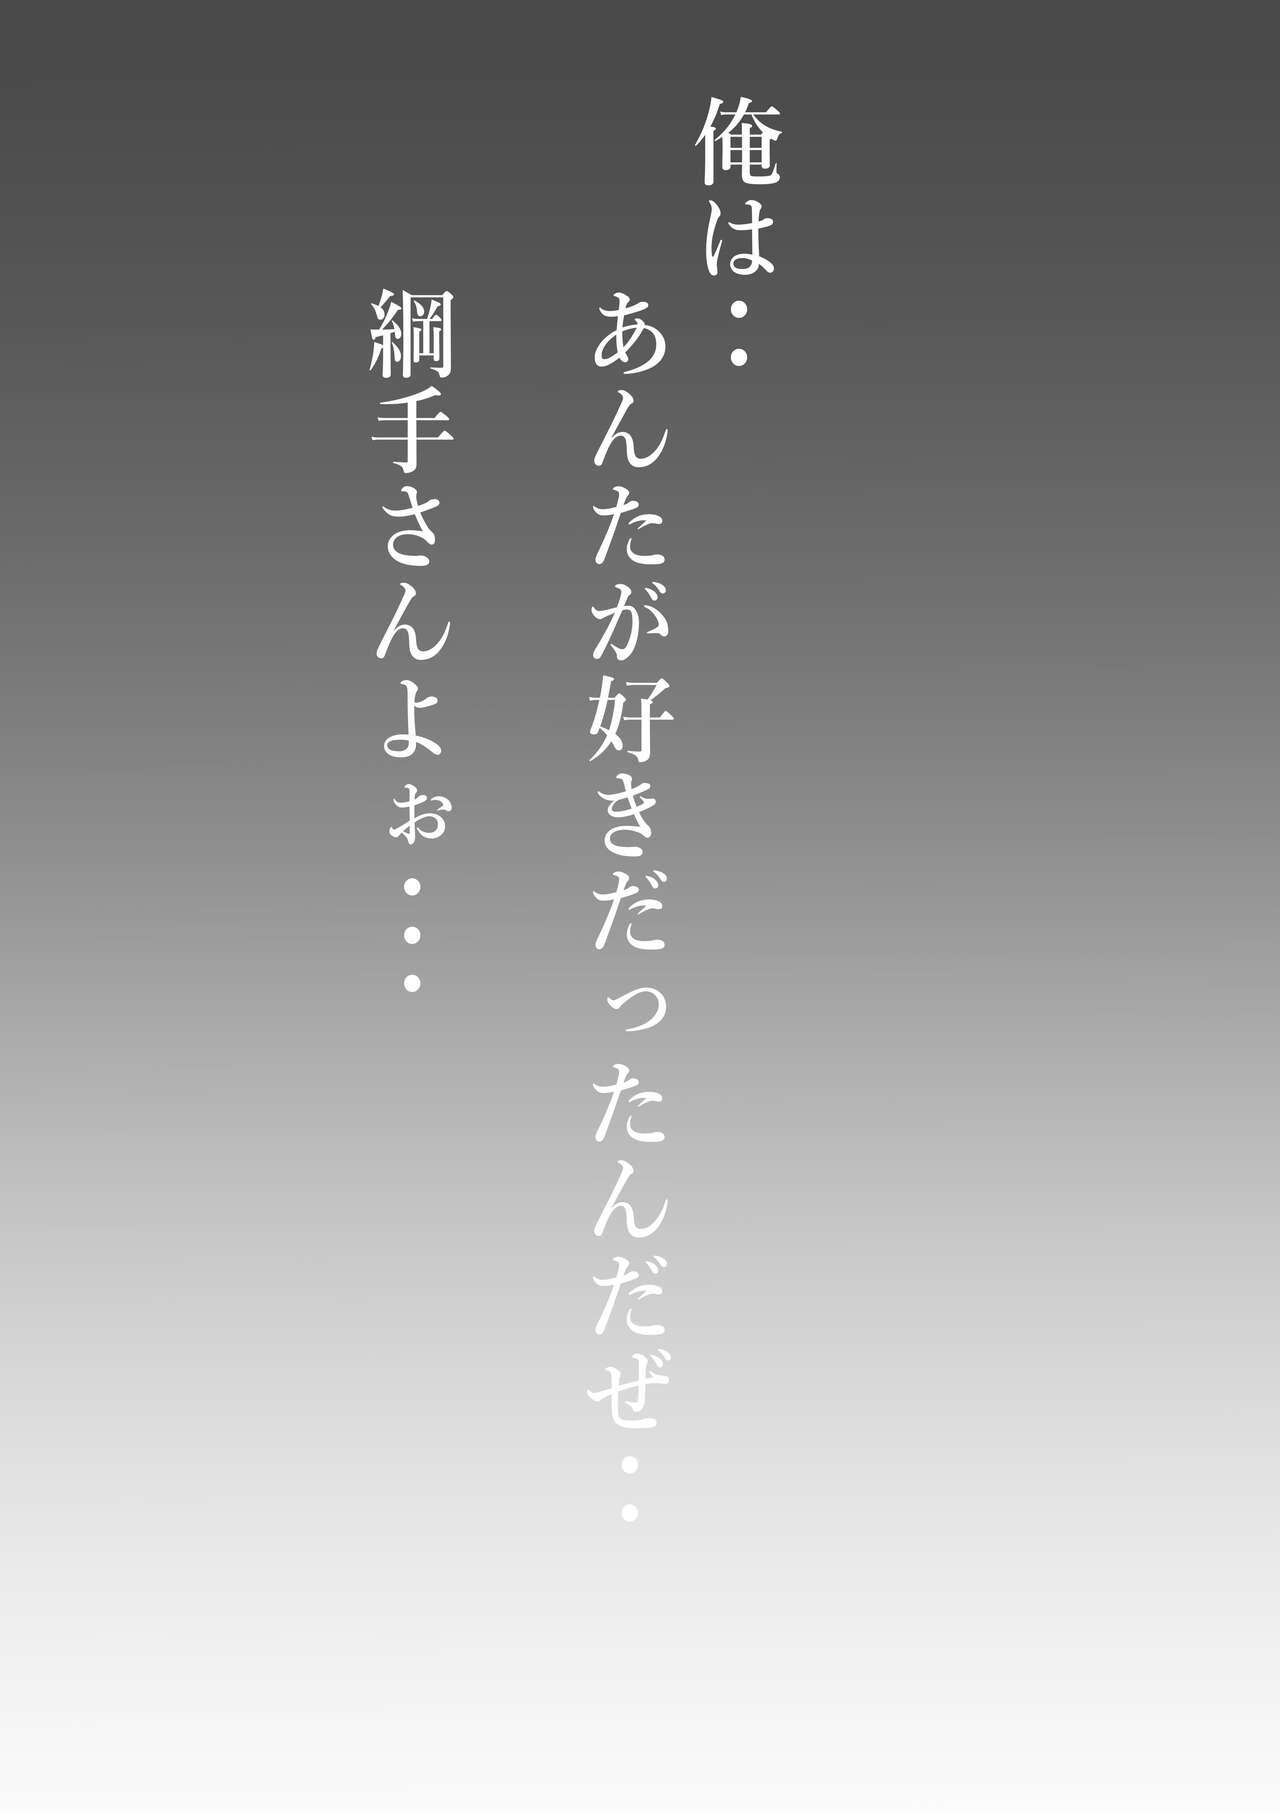 [Pixiv] ワン(13070284) Y - [Fanbox] irsz7e4s - Tsunade / Sakura 42